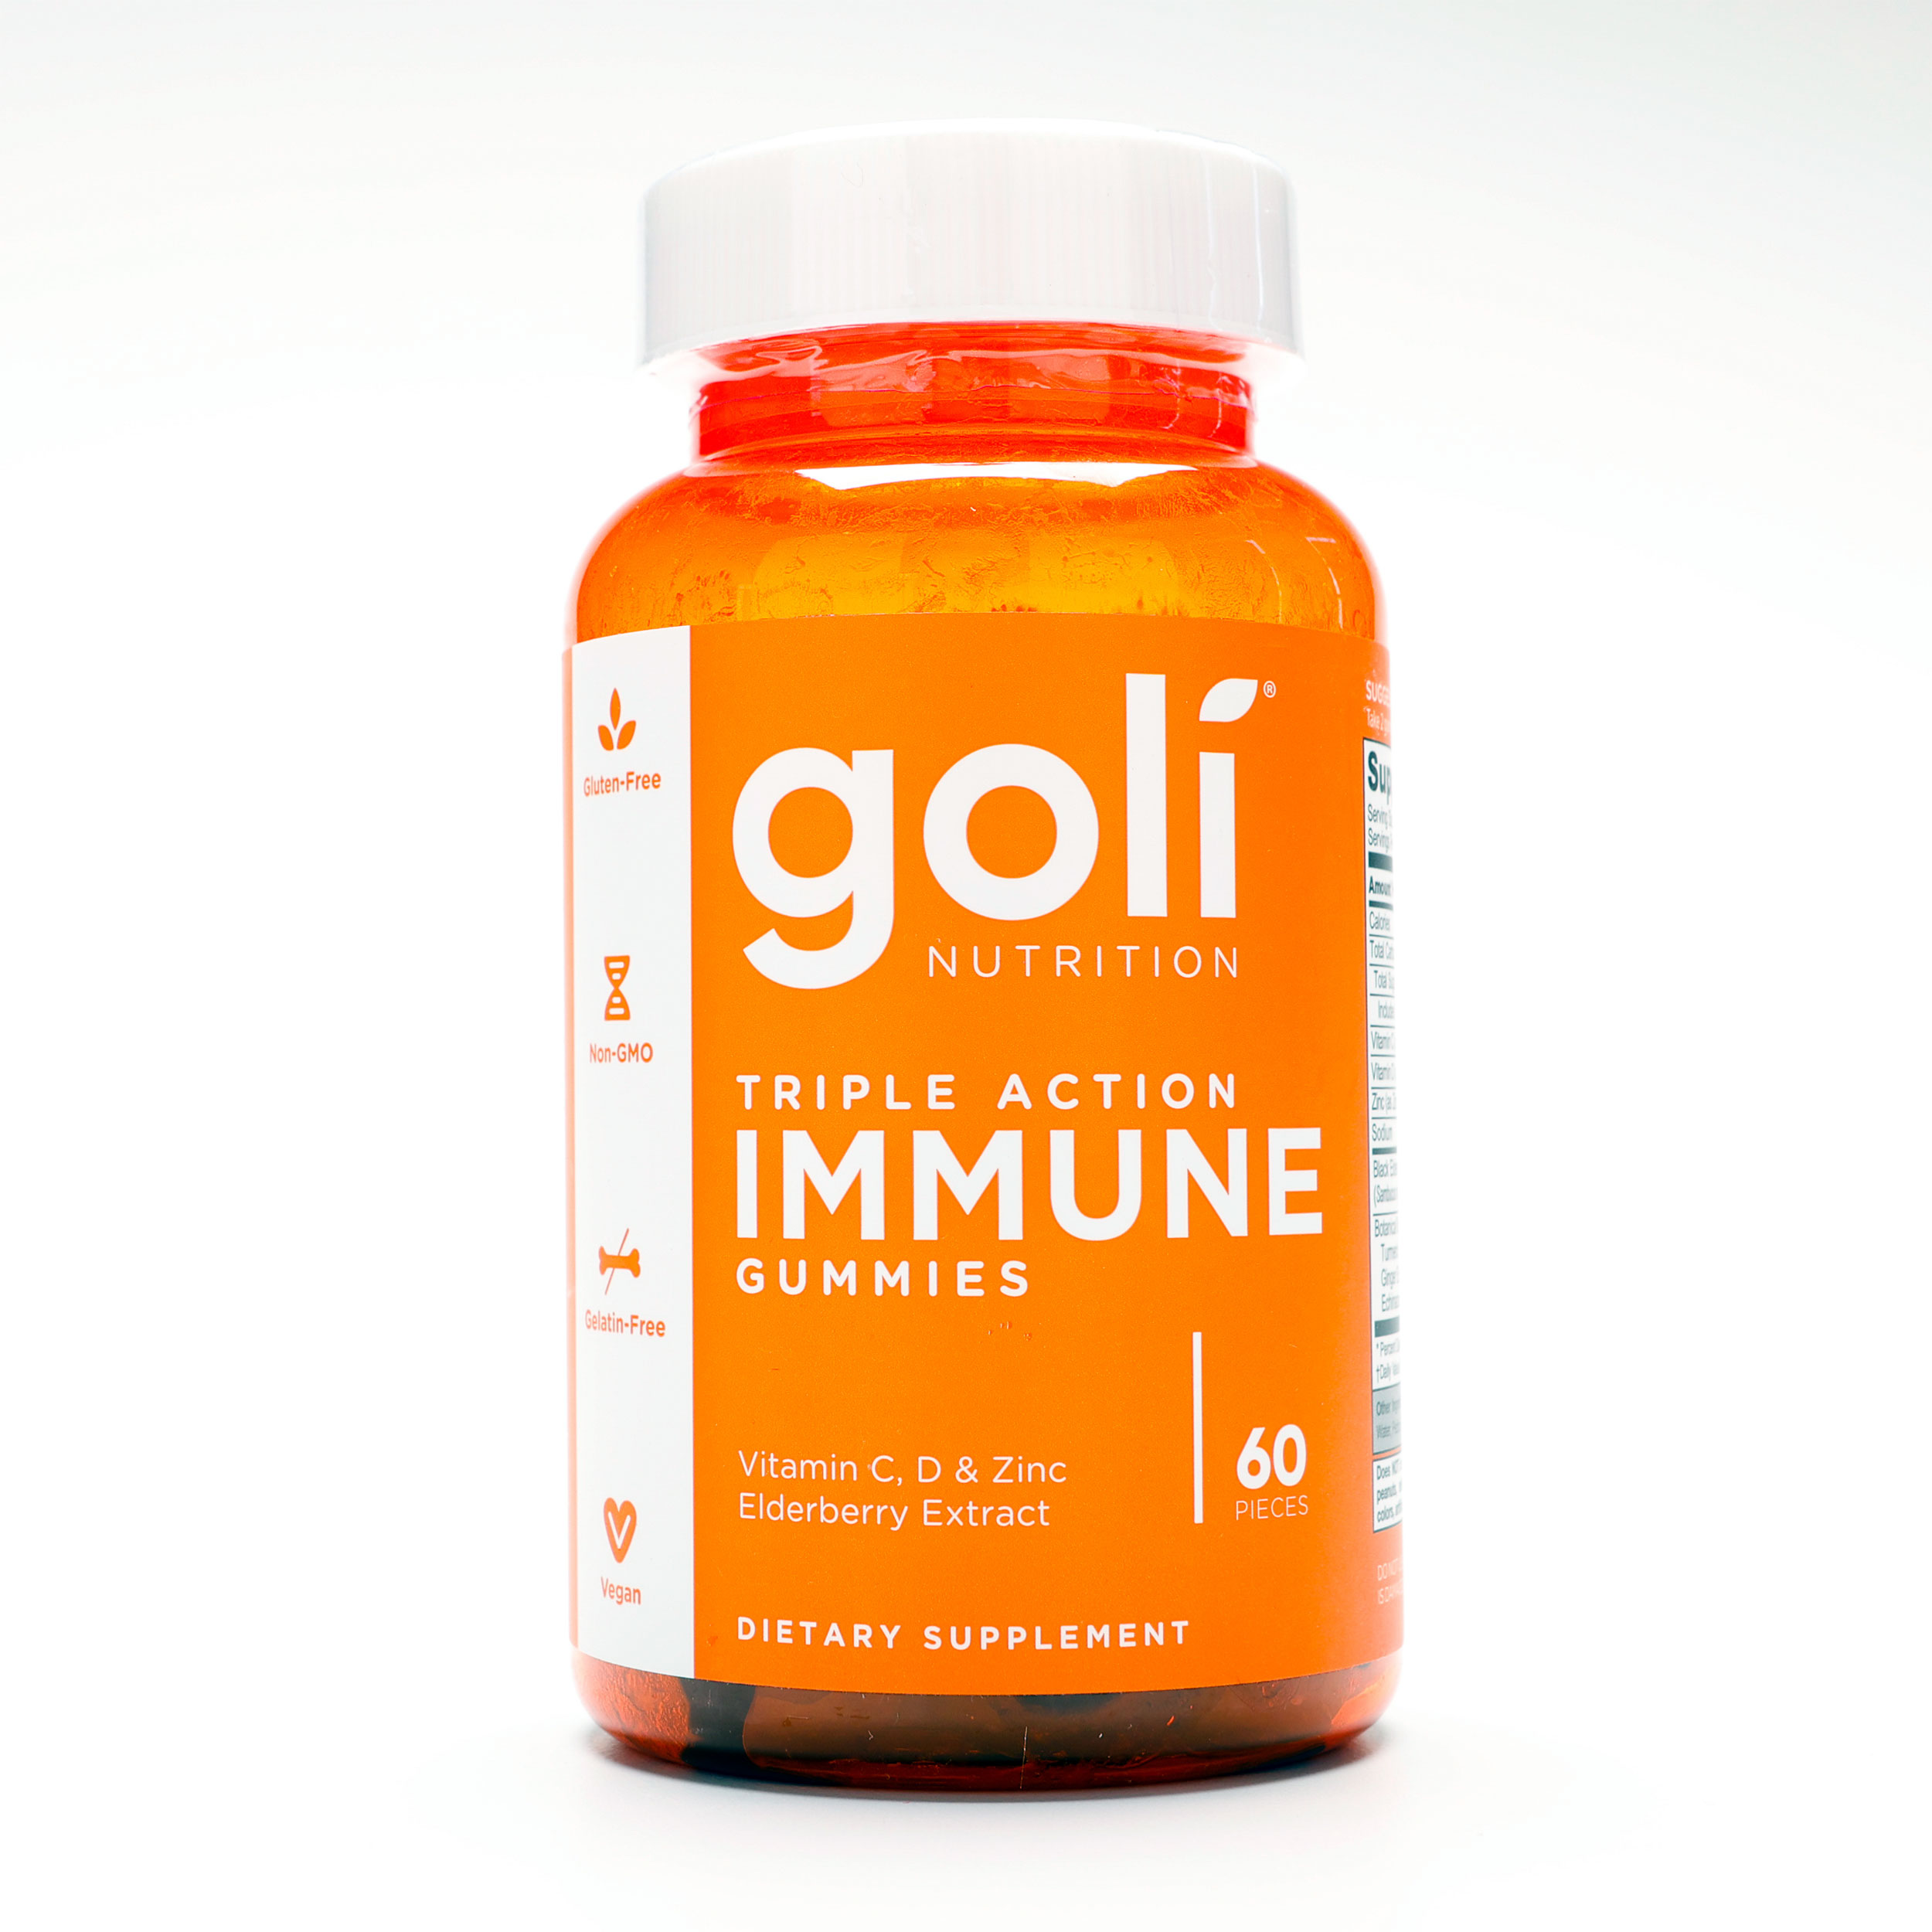 Goli® Nutrition Triple Action Immune Gummies Bottle, 60 gummies